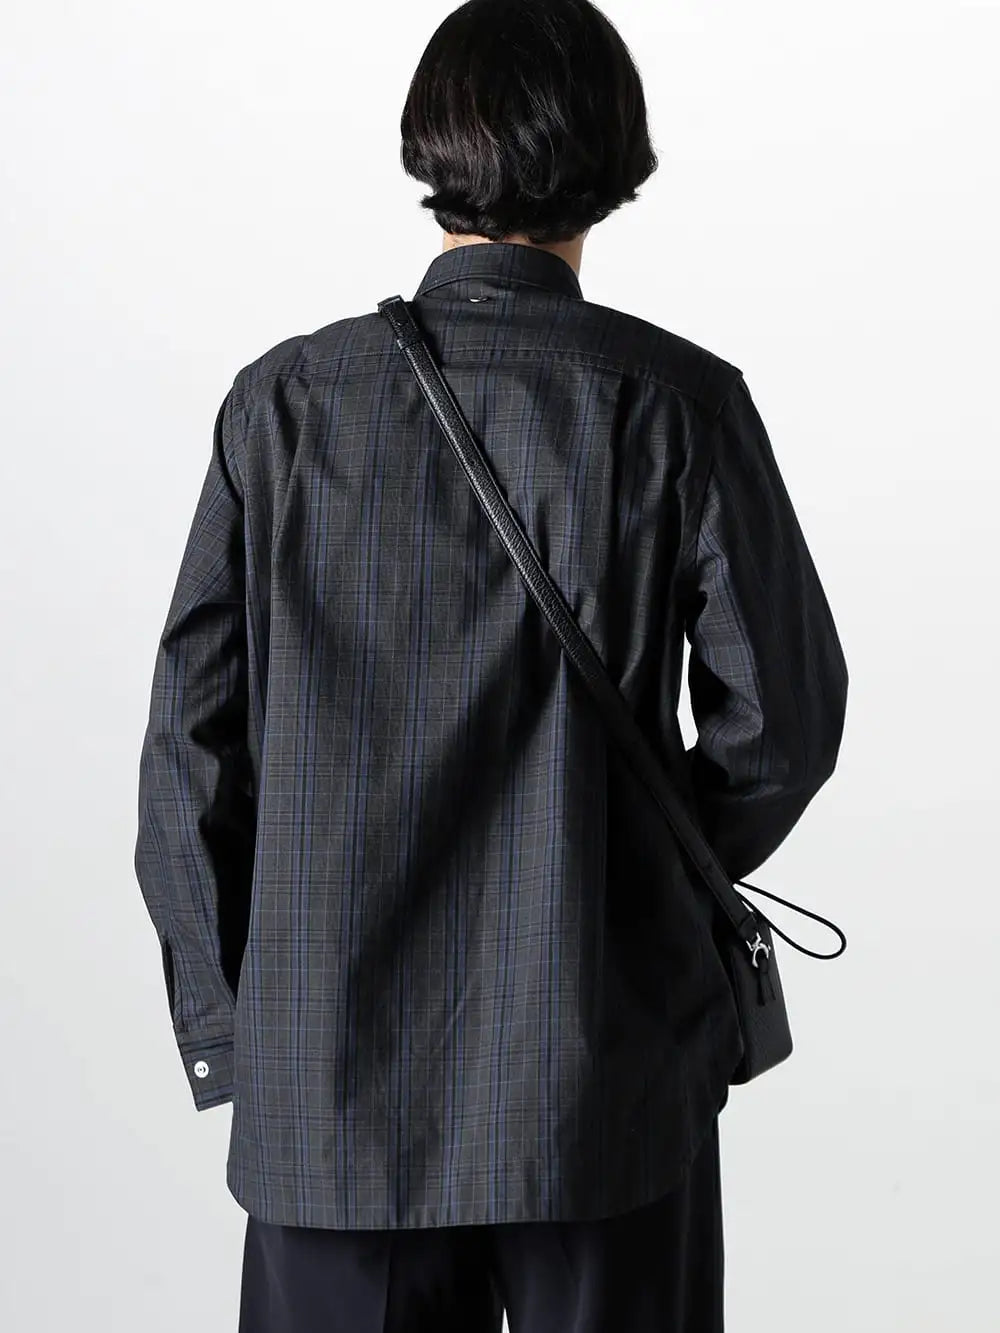 Omar Afridi  24SS  - Eye-catching tartan check shirt - SS24-BZ-107-01 - Shirt Blouson Techno Tartan Check 2-003